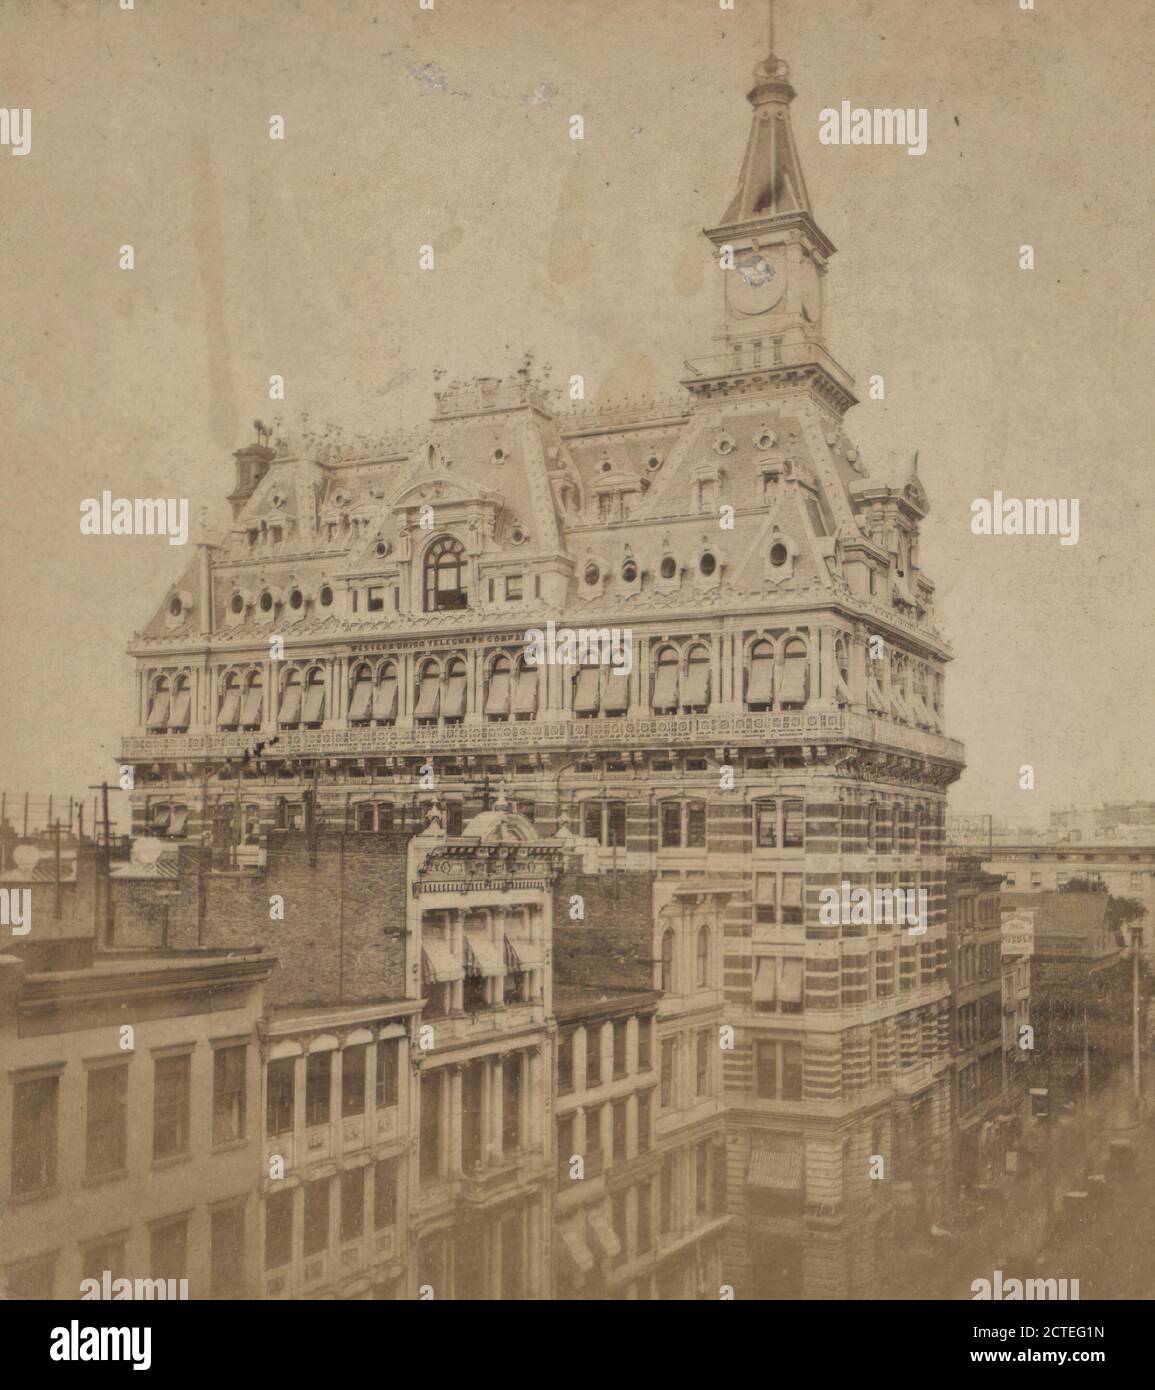 Panorama do Western Union Telegraph Office, em Nova York, c.1890s